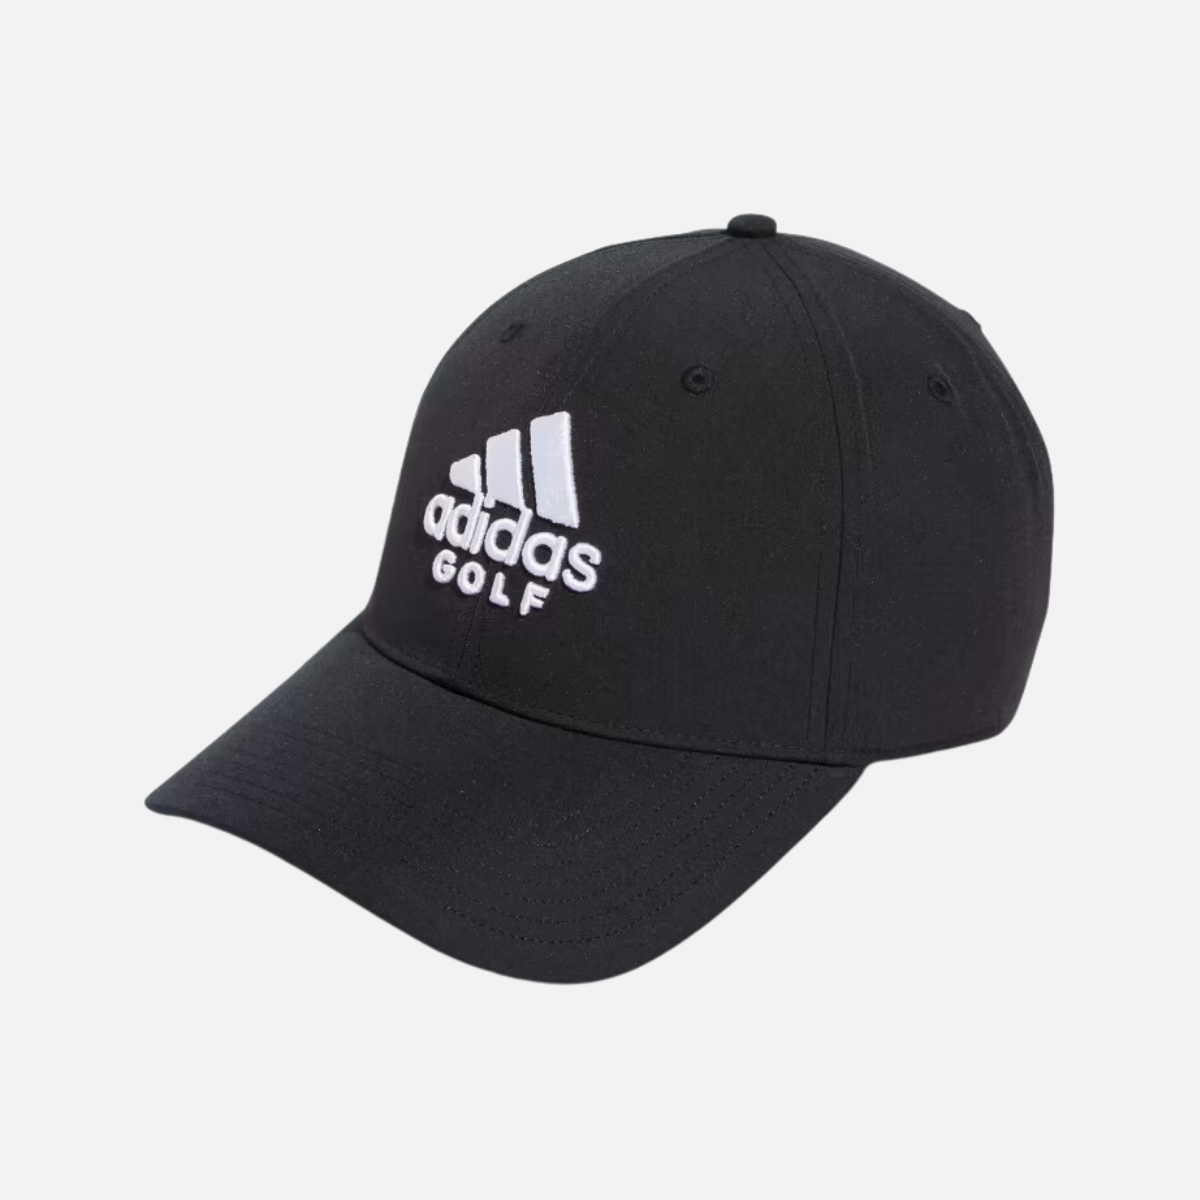 Adidas Golf Performance Men's Cap -Black